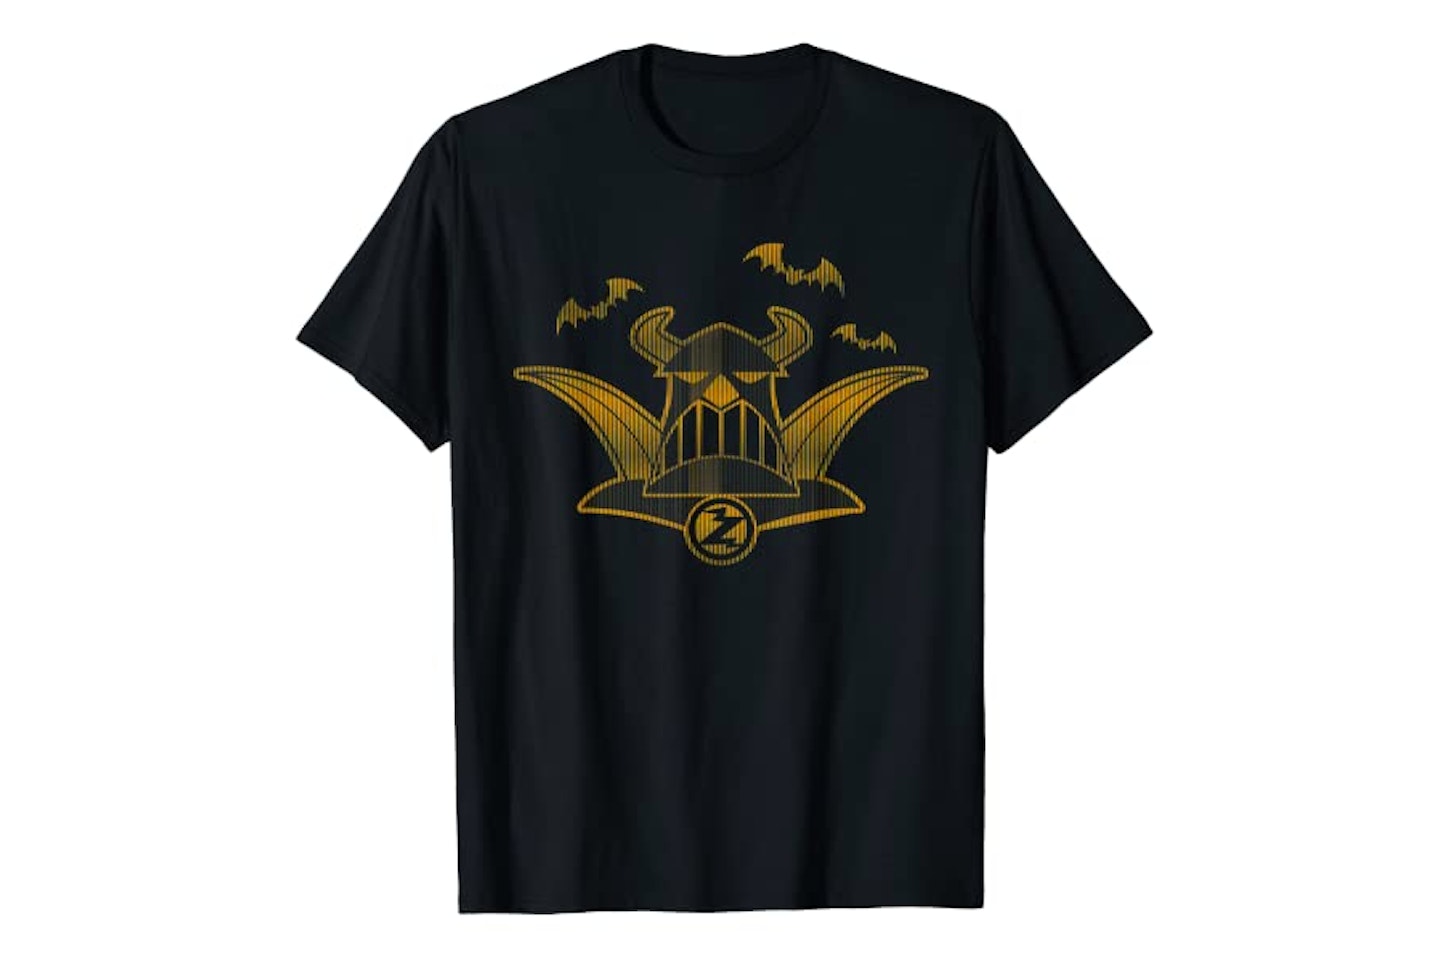 Emperor Zurg T-Shirt